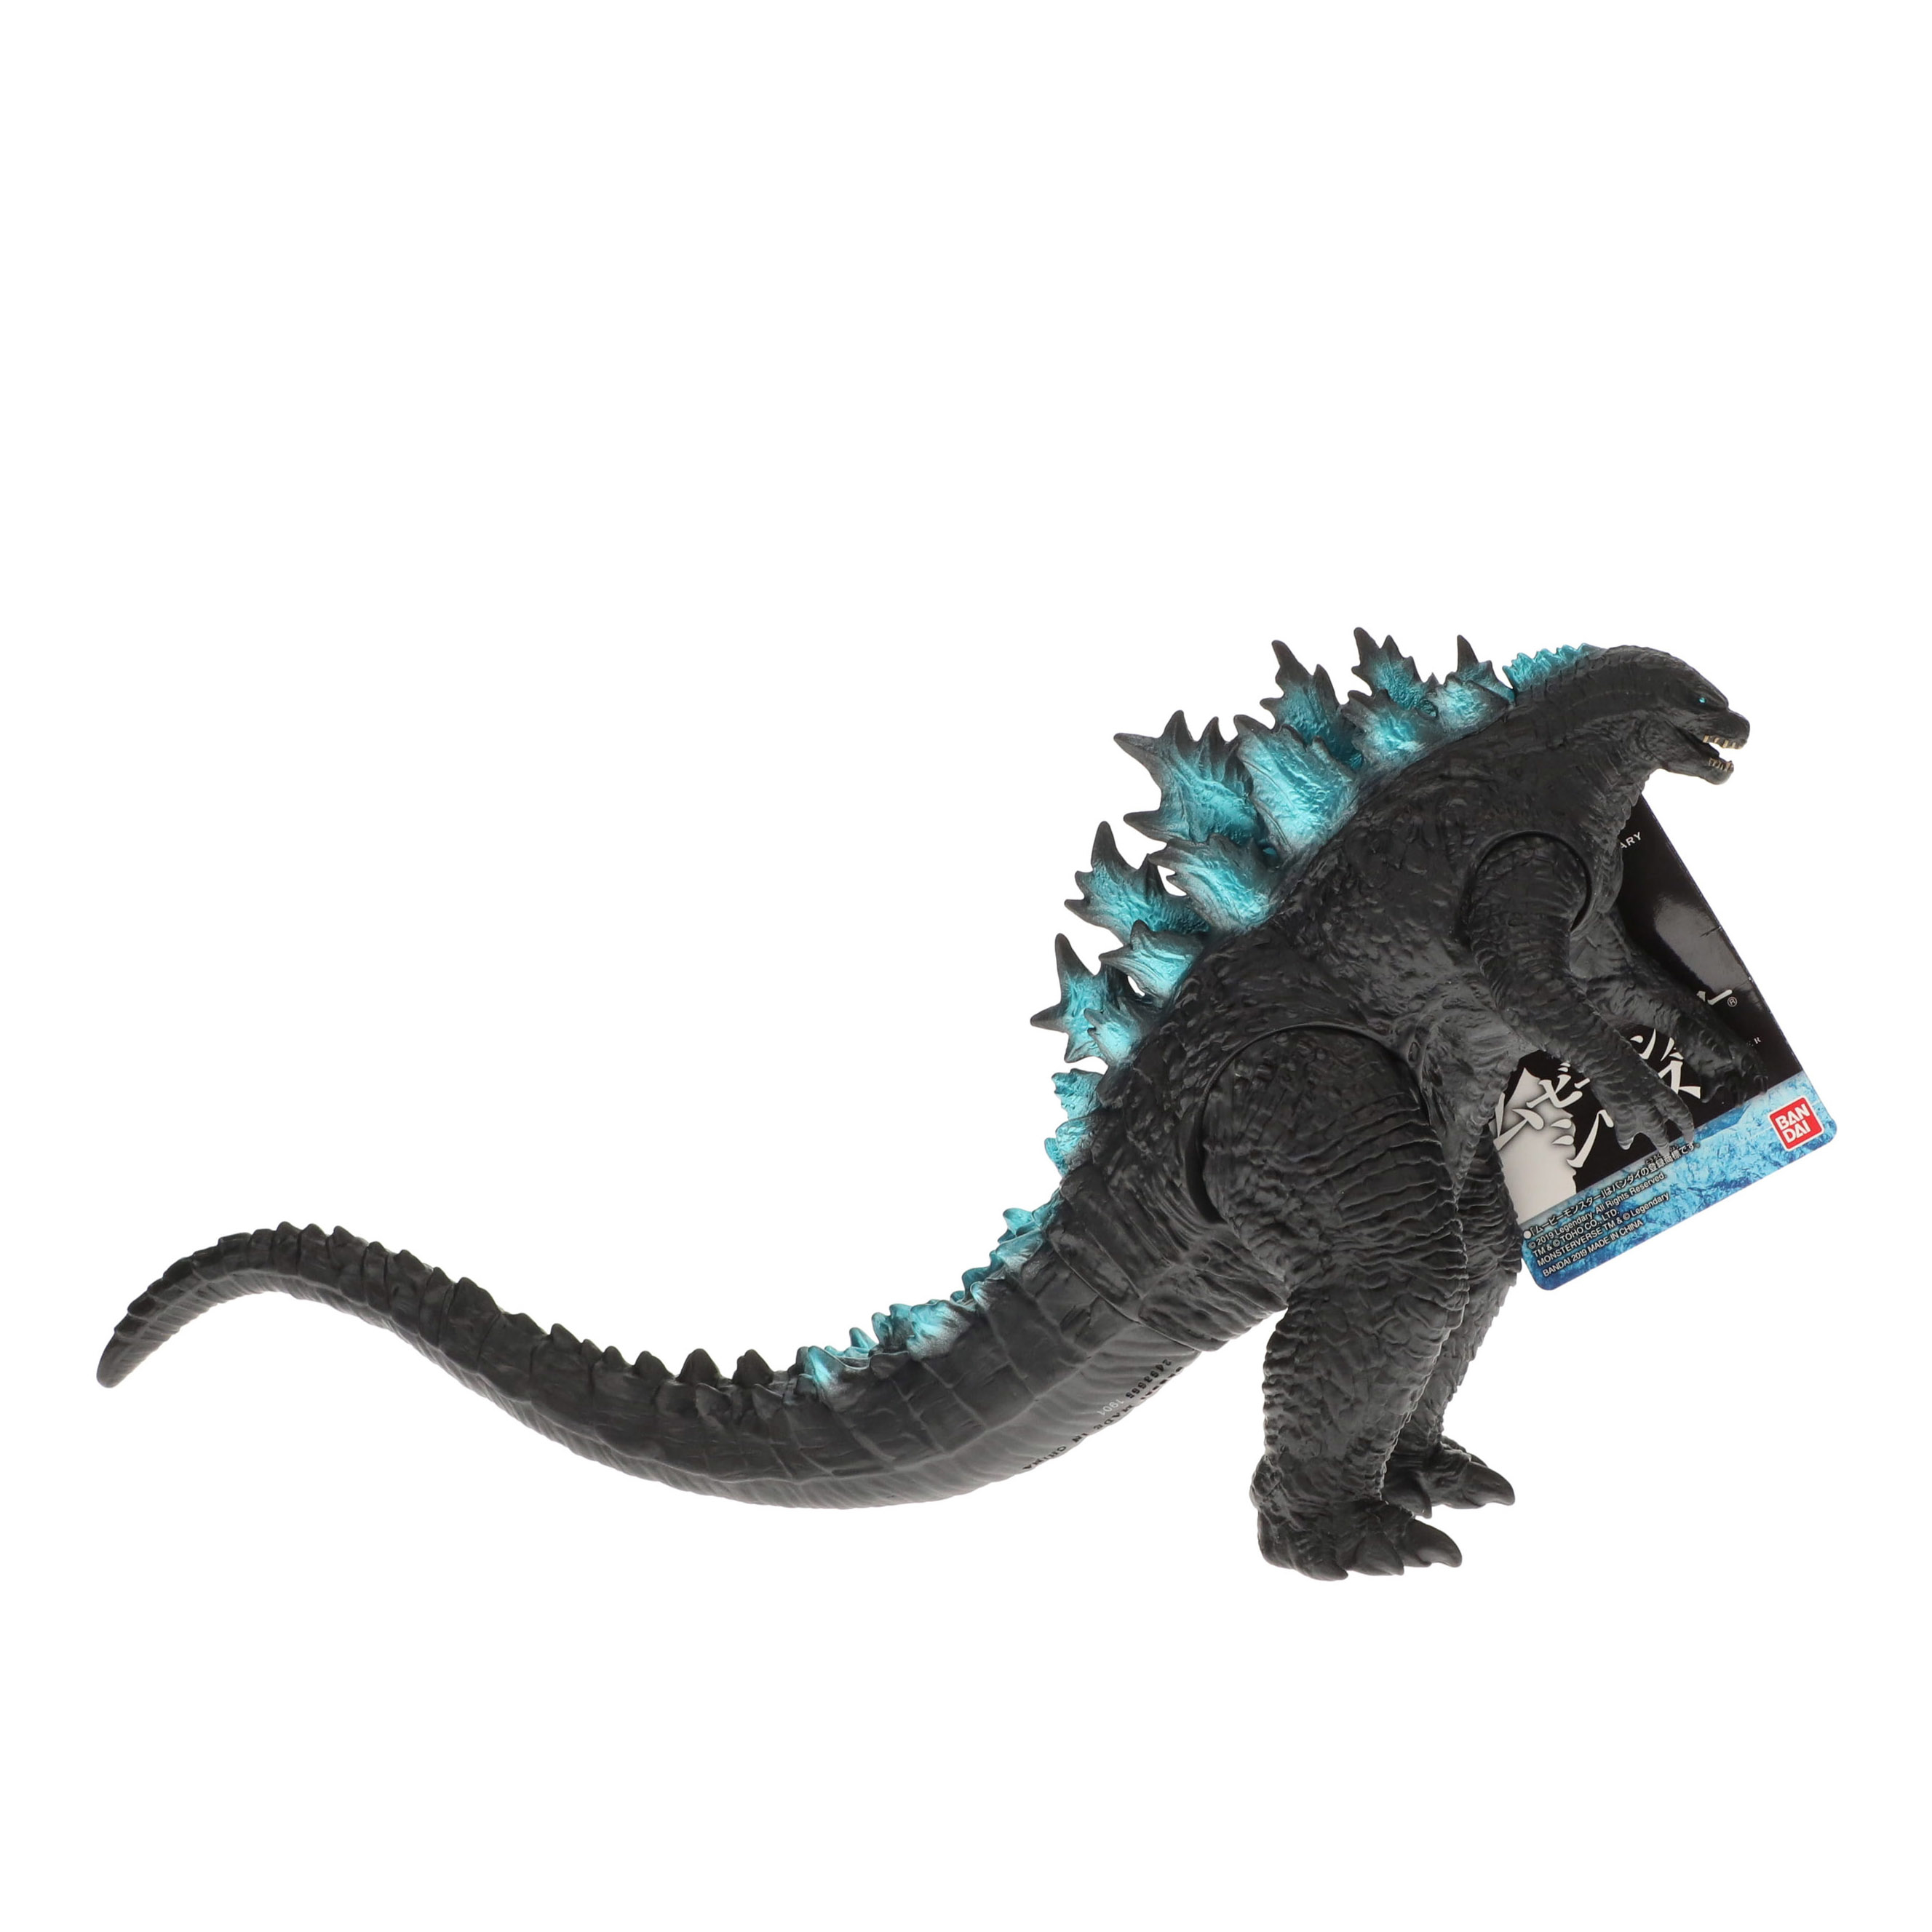 Godzilla 2019 Bandai Movie Monster Series Vinyl Figure